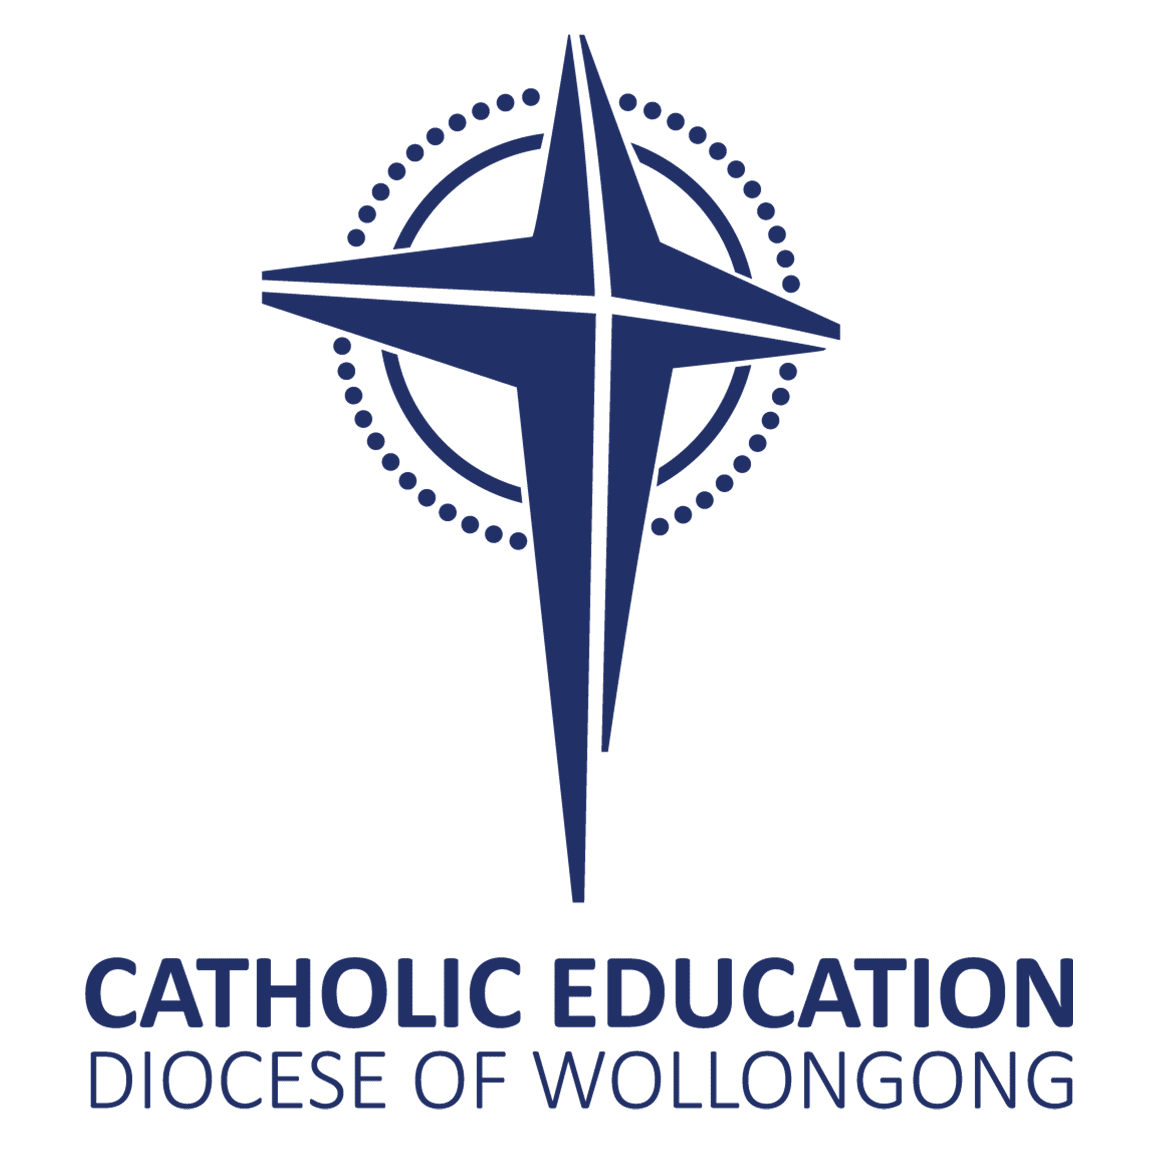 Catholic Education, Diocese of Wollongong logo